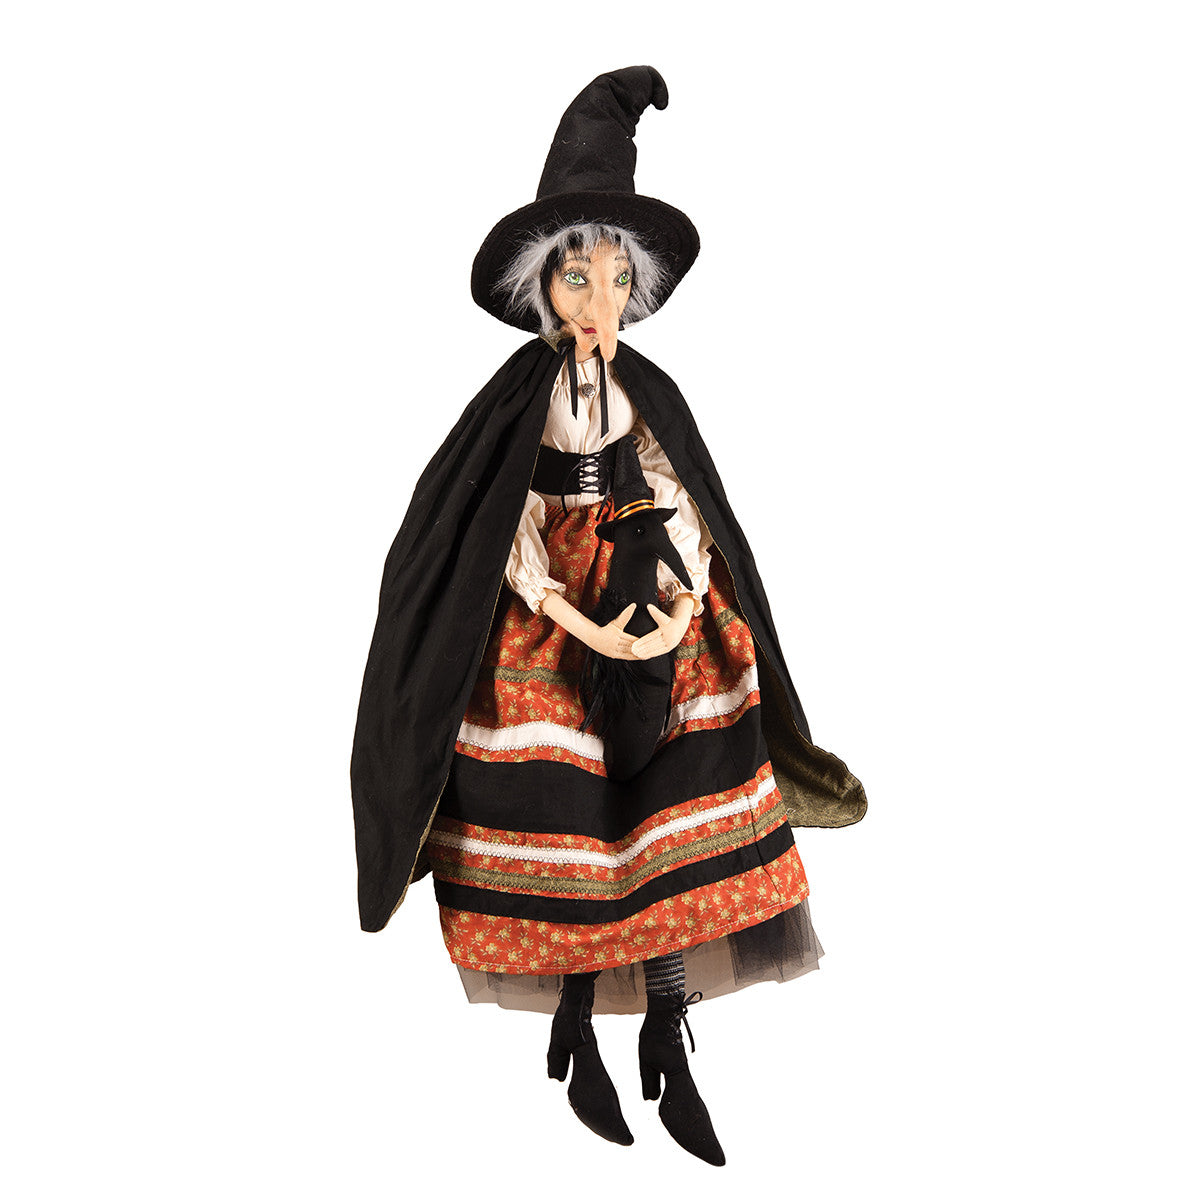 Batilda Witch with Crow - Joe Spencer Halloween Doll